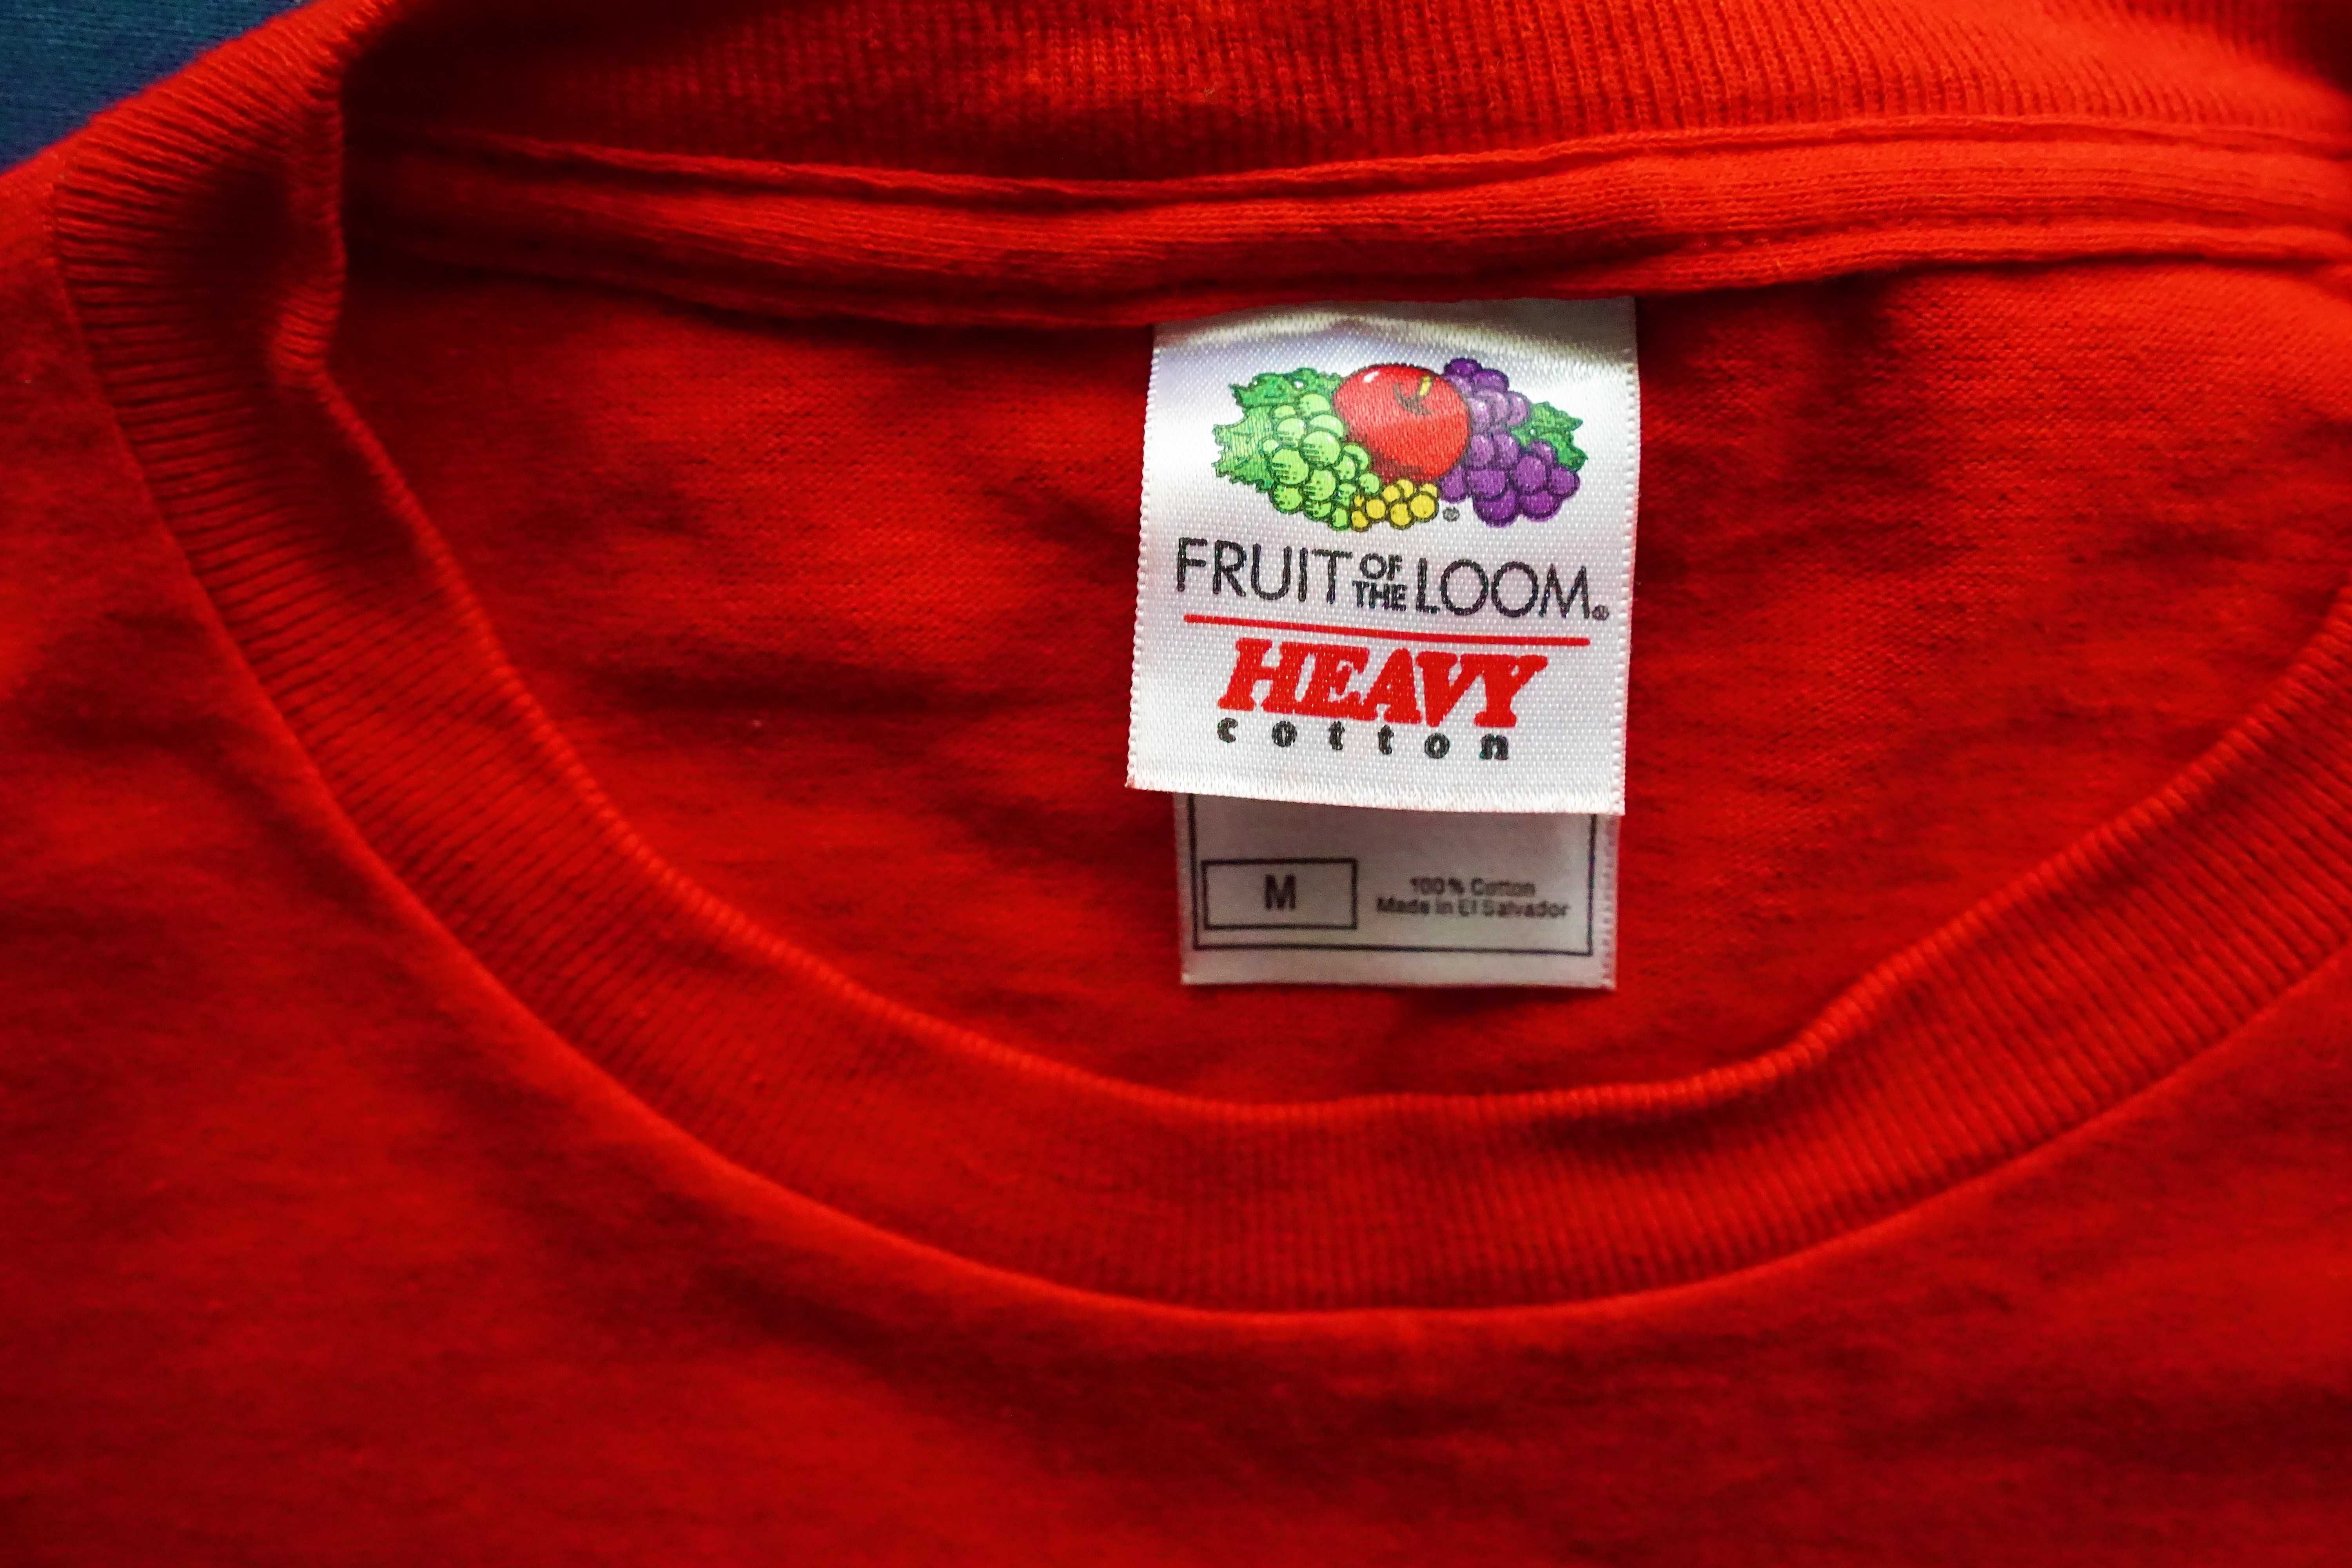 t-shirt Liverpool finał Ligi Mistrzów 2007 Fruit of the Loom